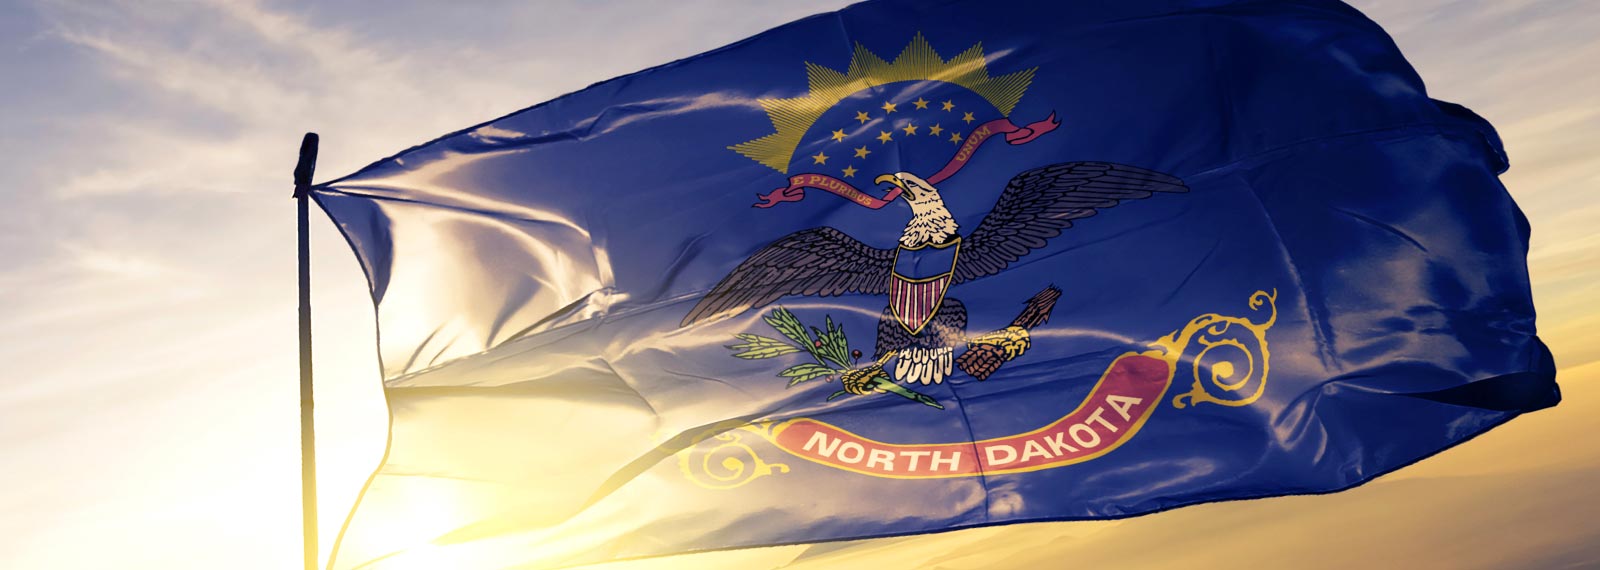 Beaudry-Law-North-Dakota